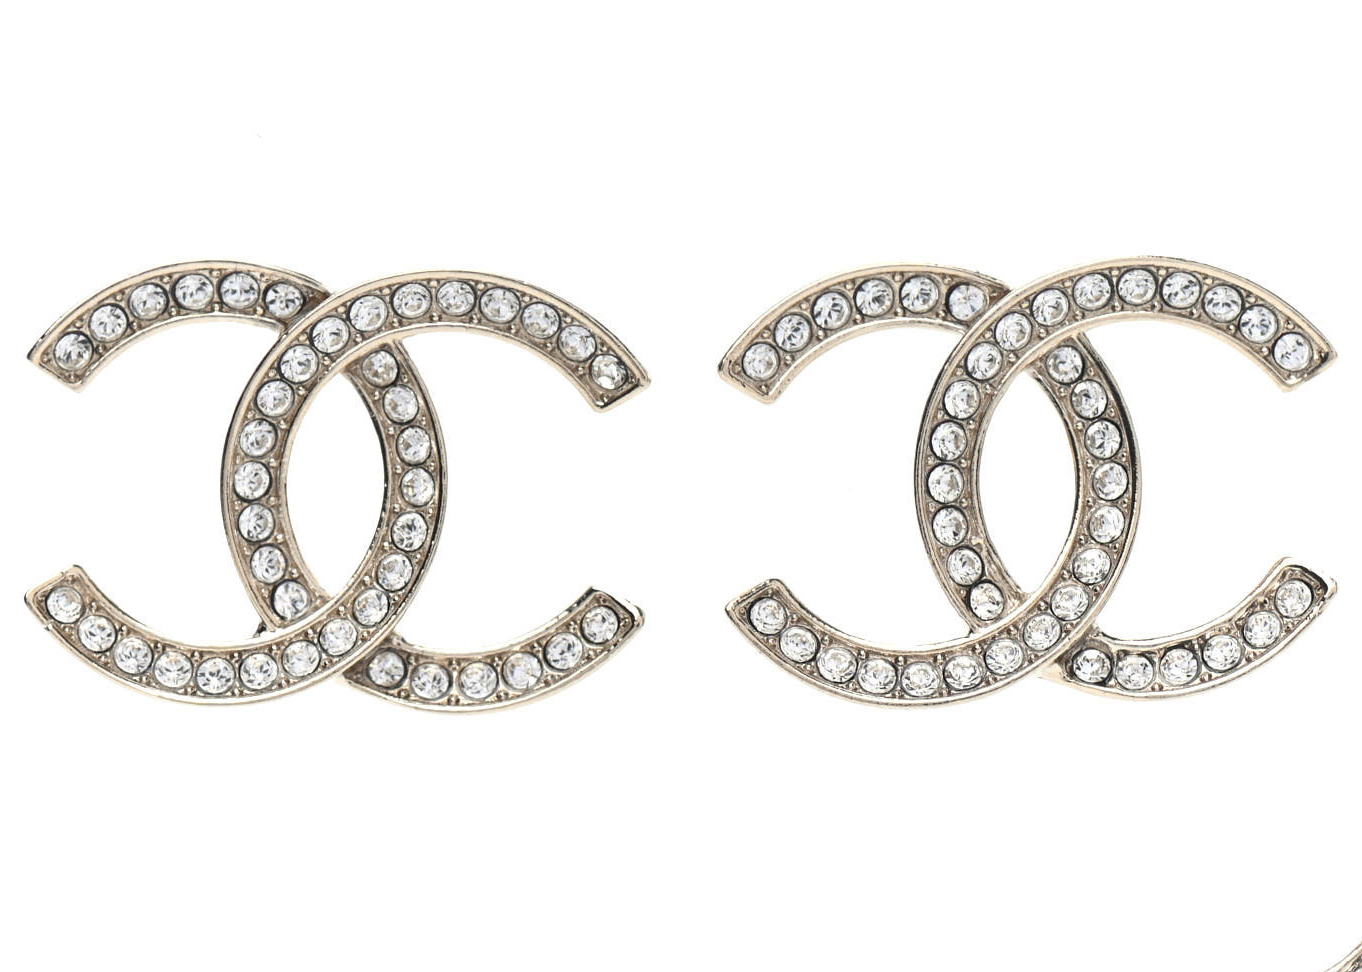 CHANEL  Jewelry  Like New Classic Chanel Cc Earrings In Box Hardly Worn   Poshmark